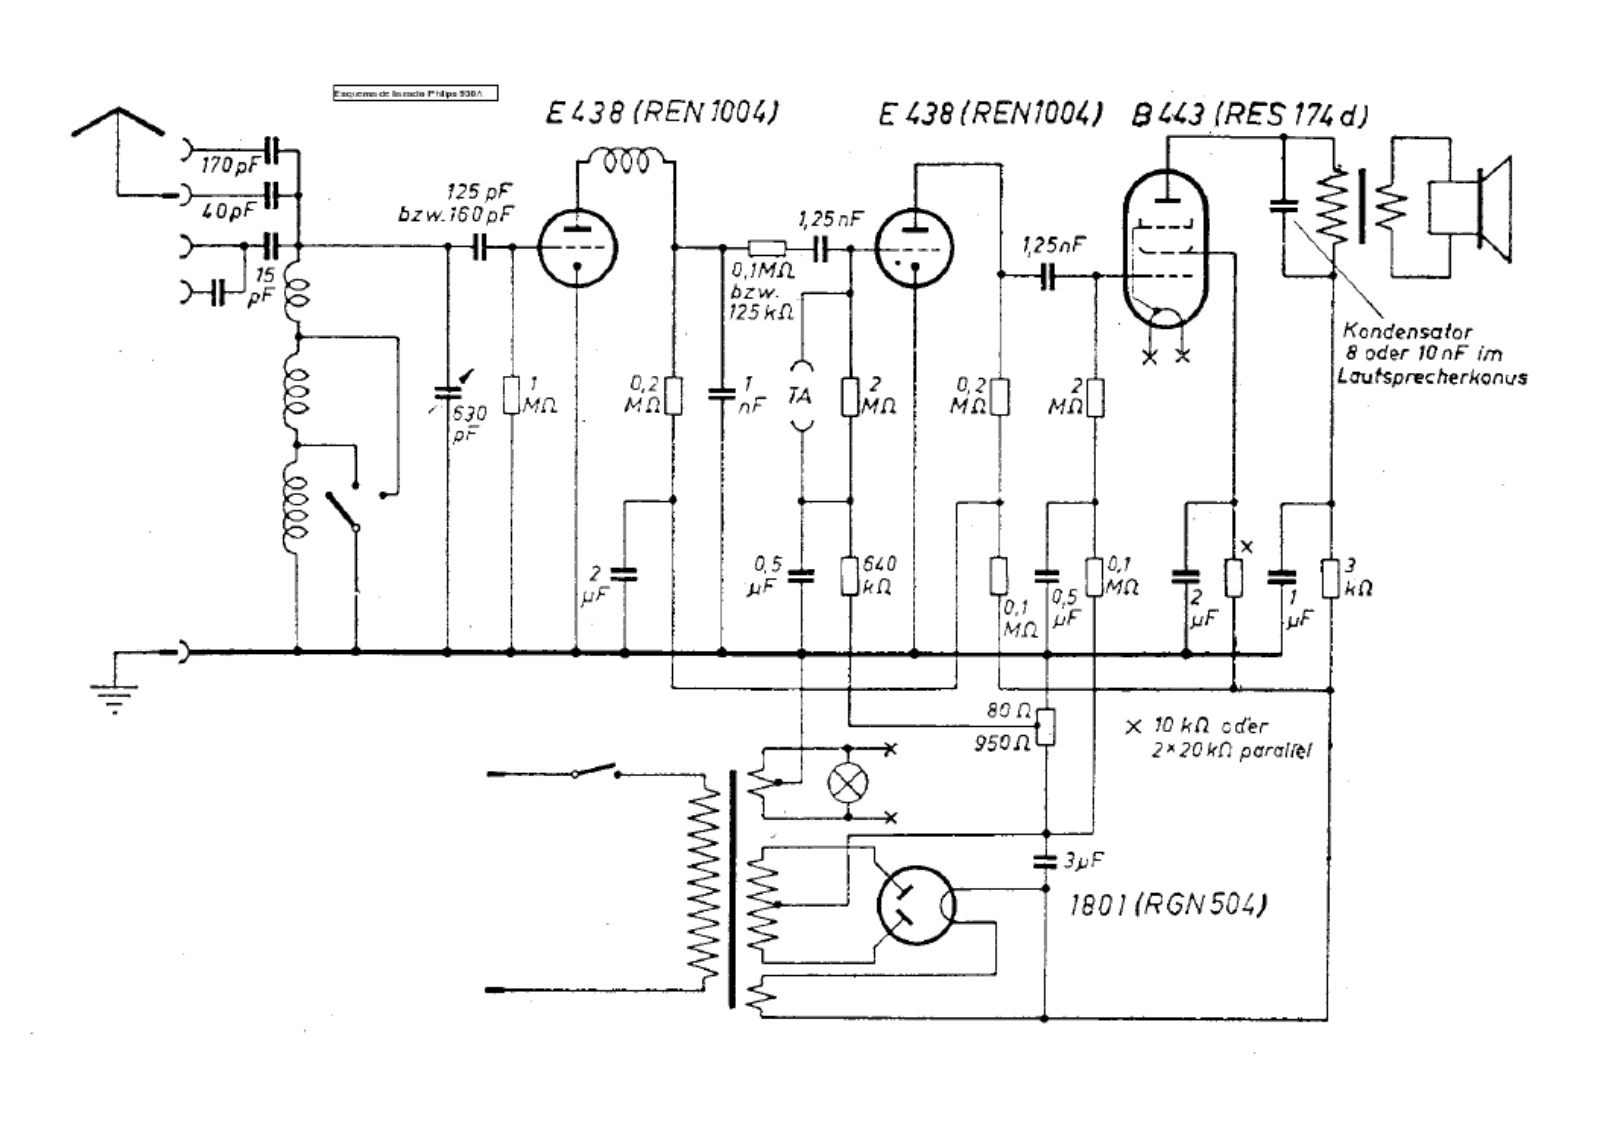 Philips 930a schematic